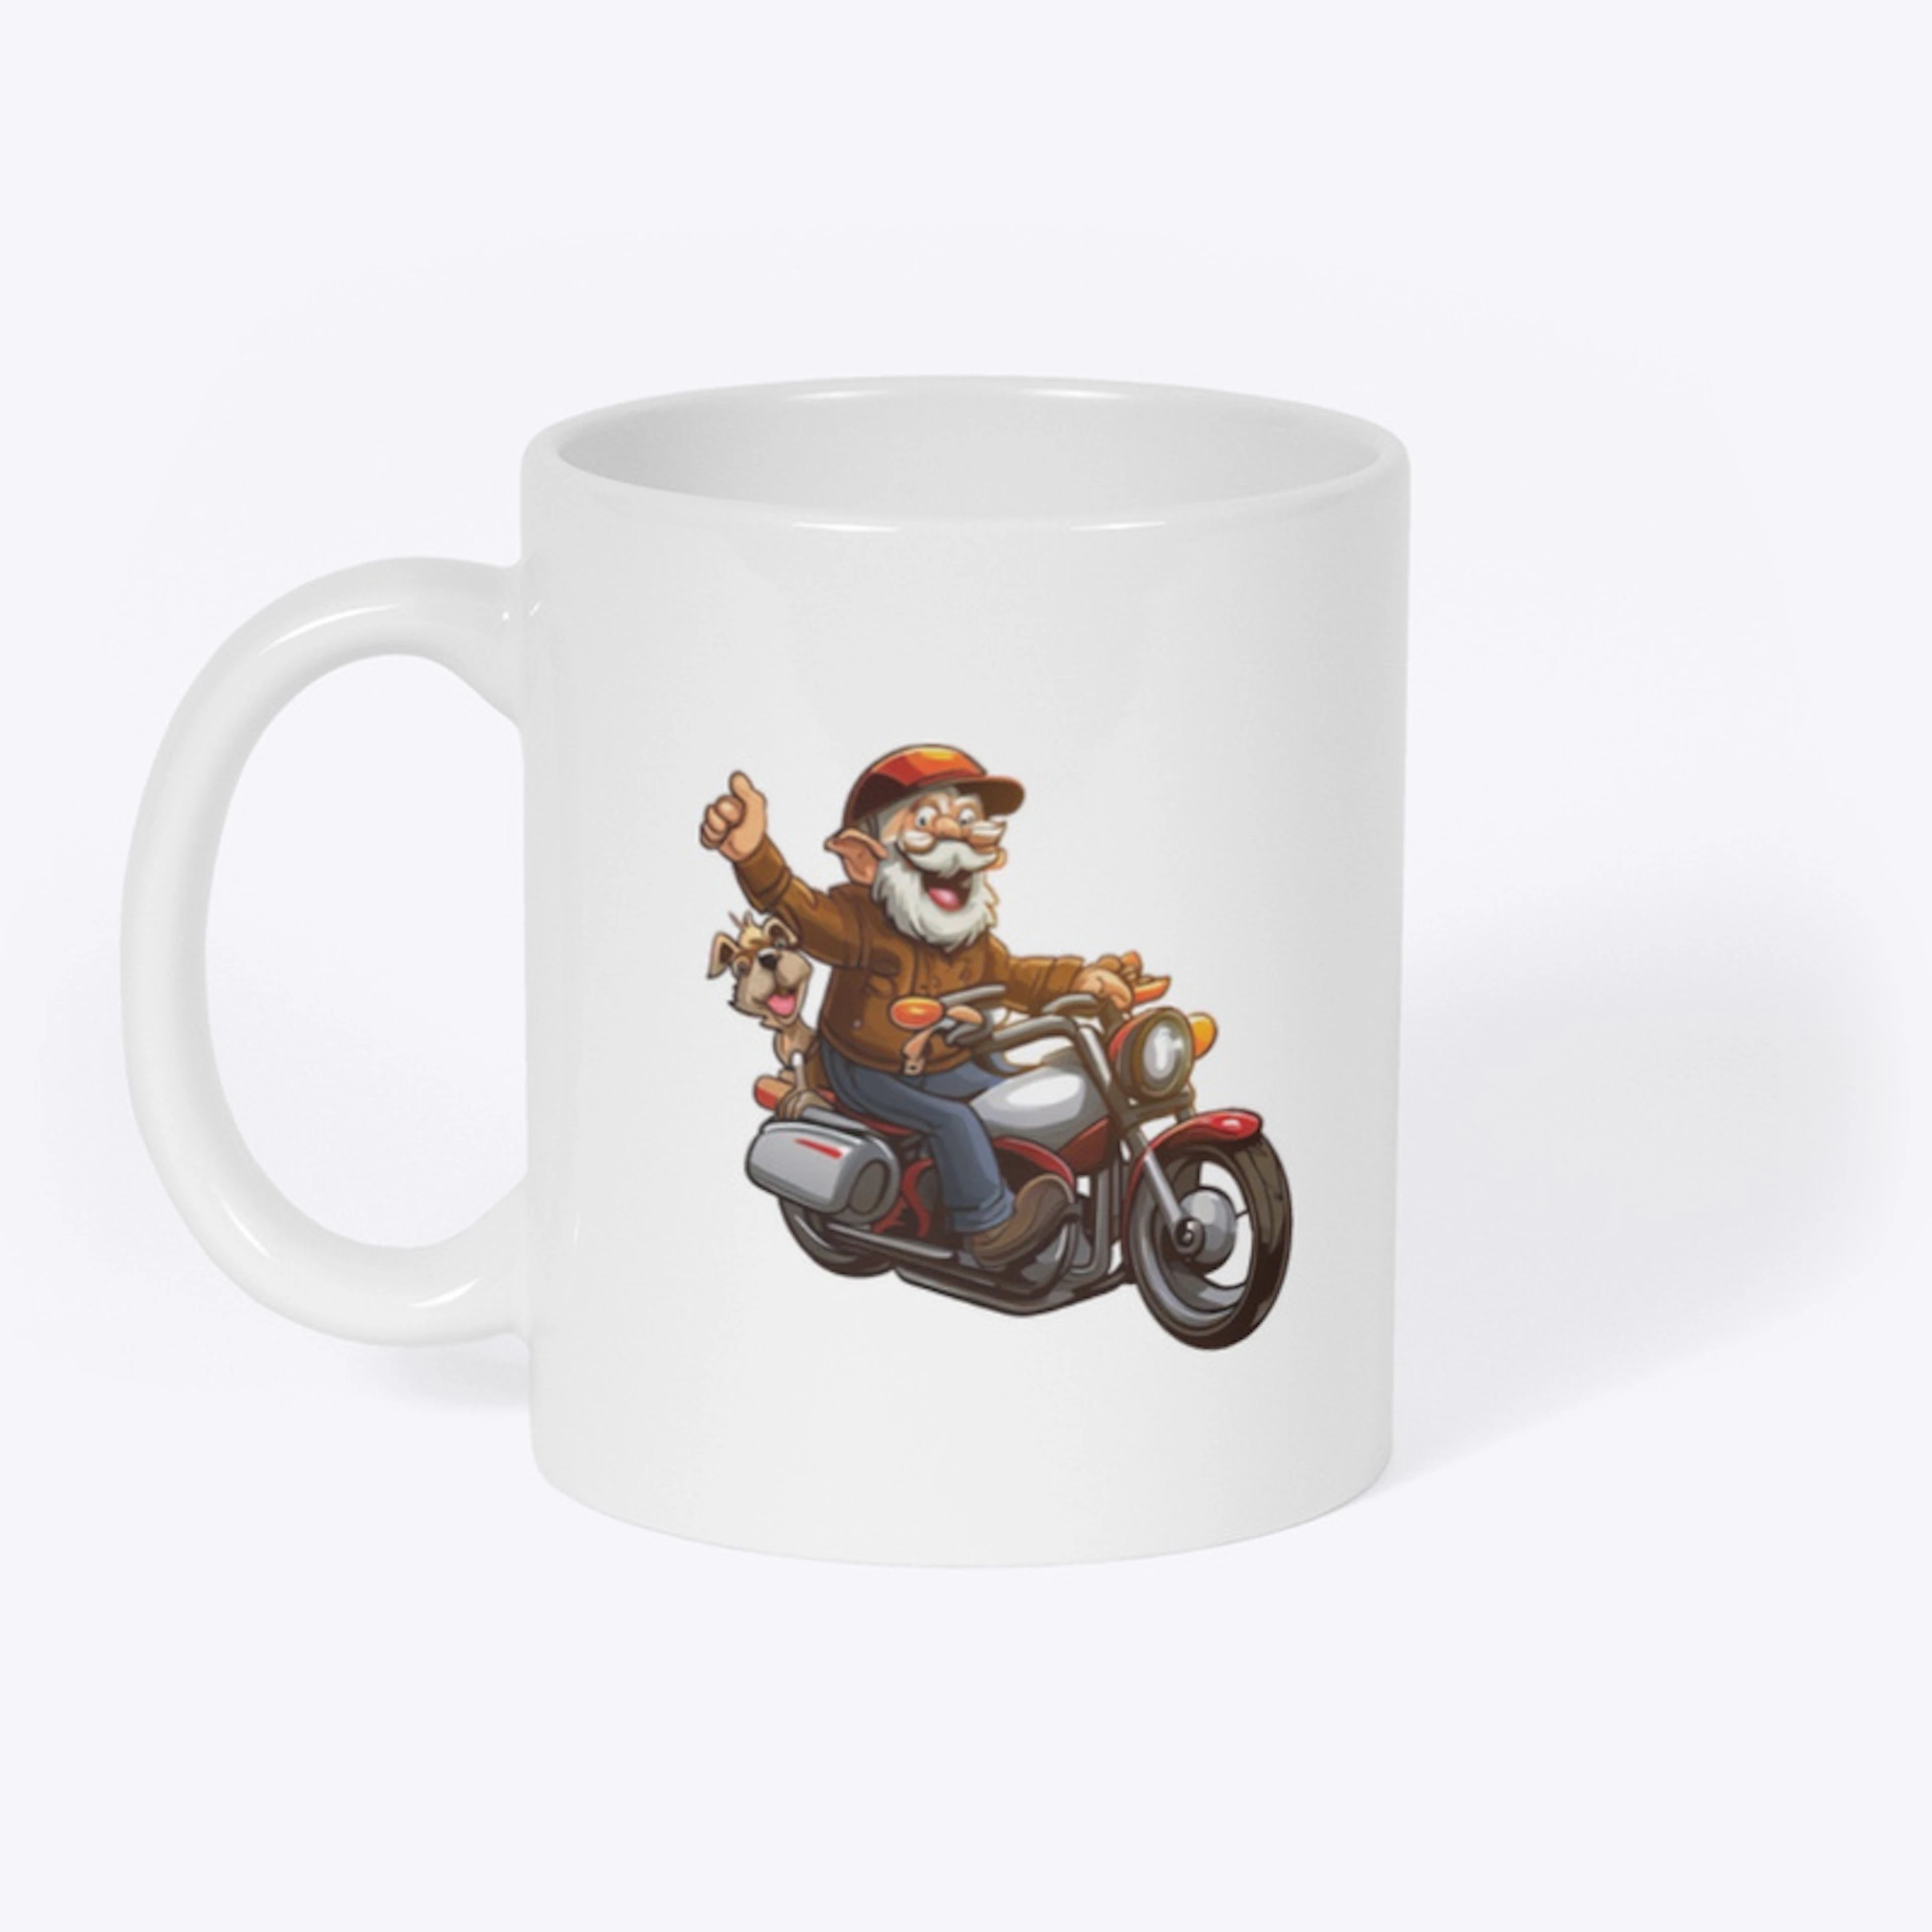  Never Too Old to Ride Grandpa Mug